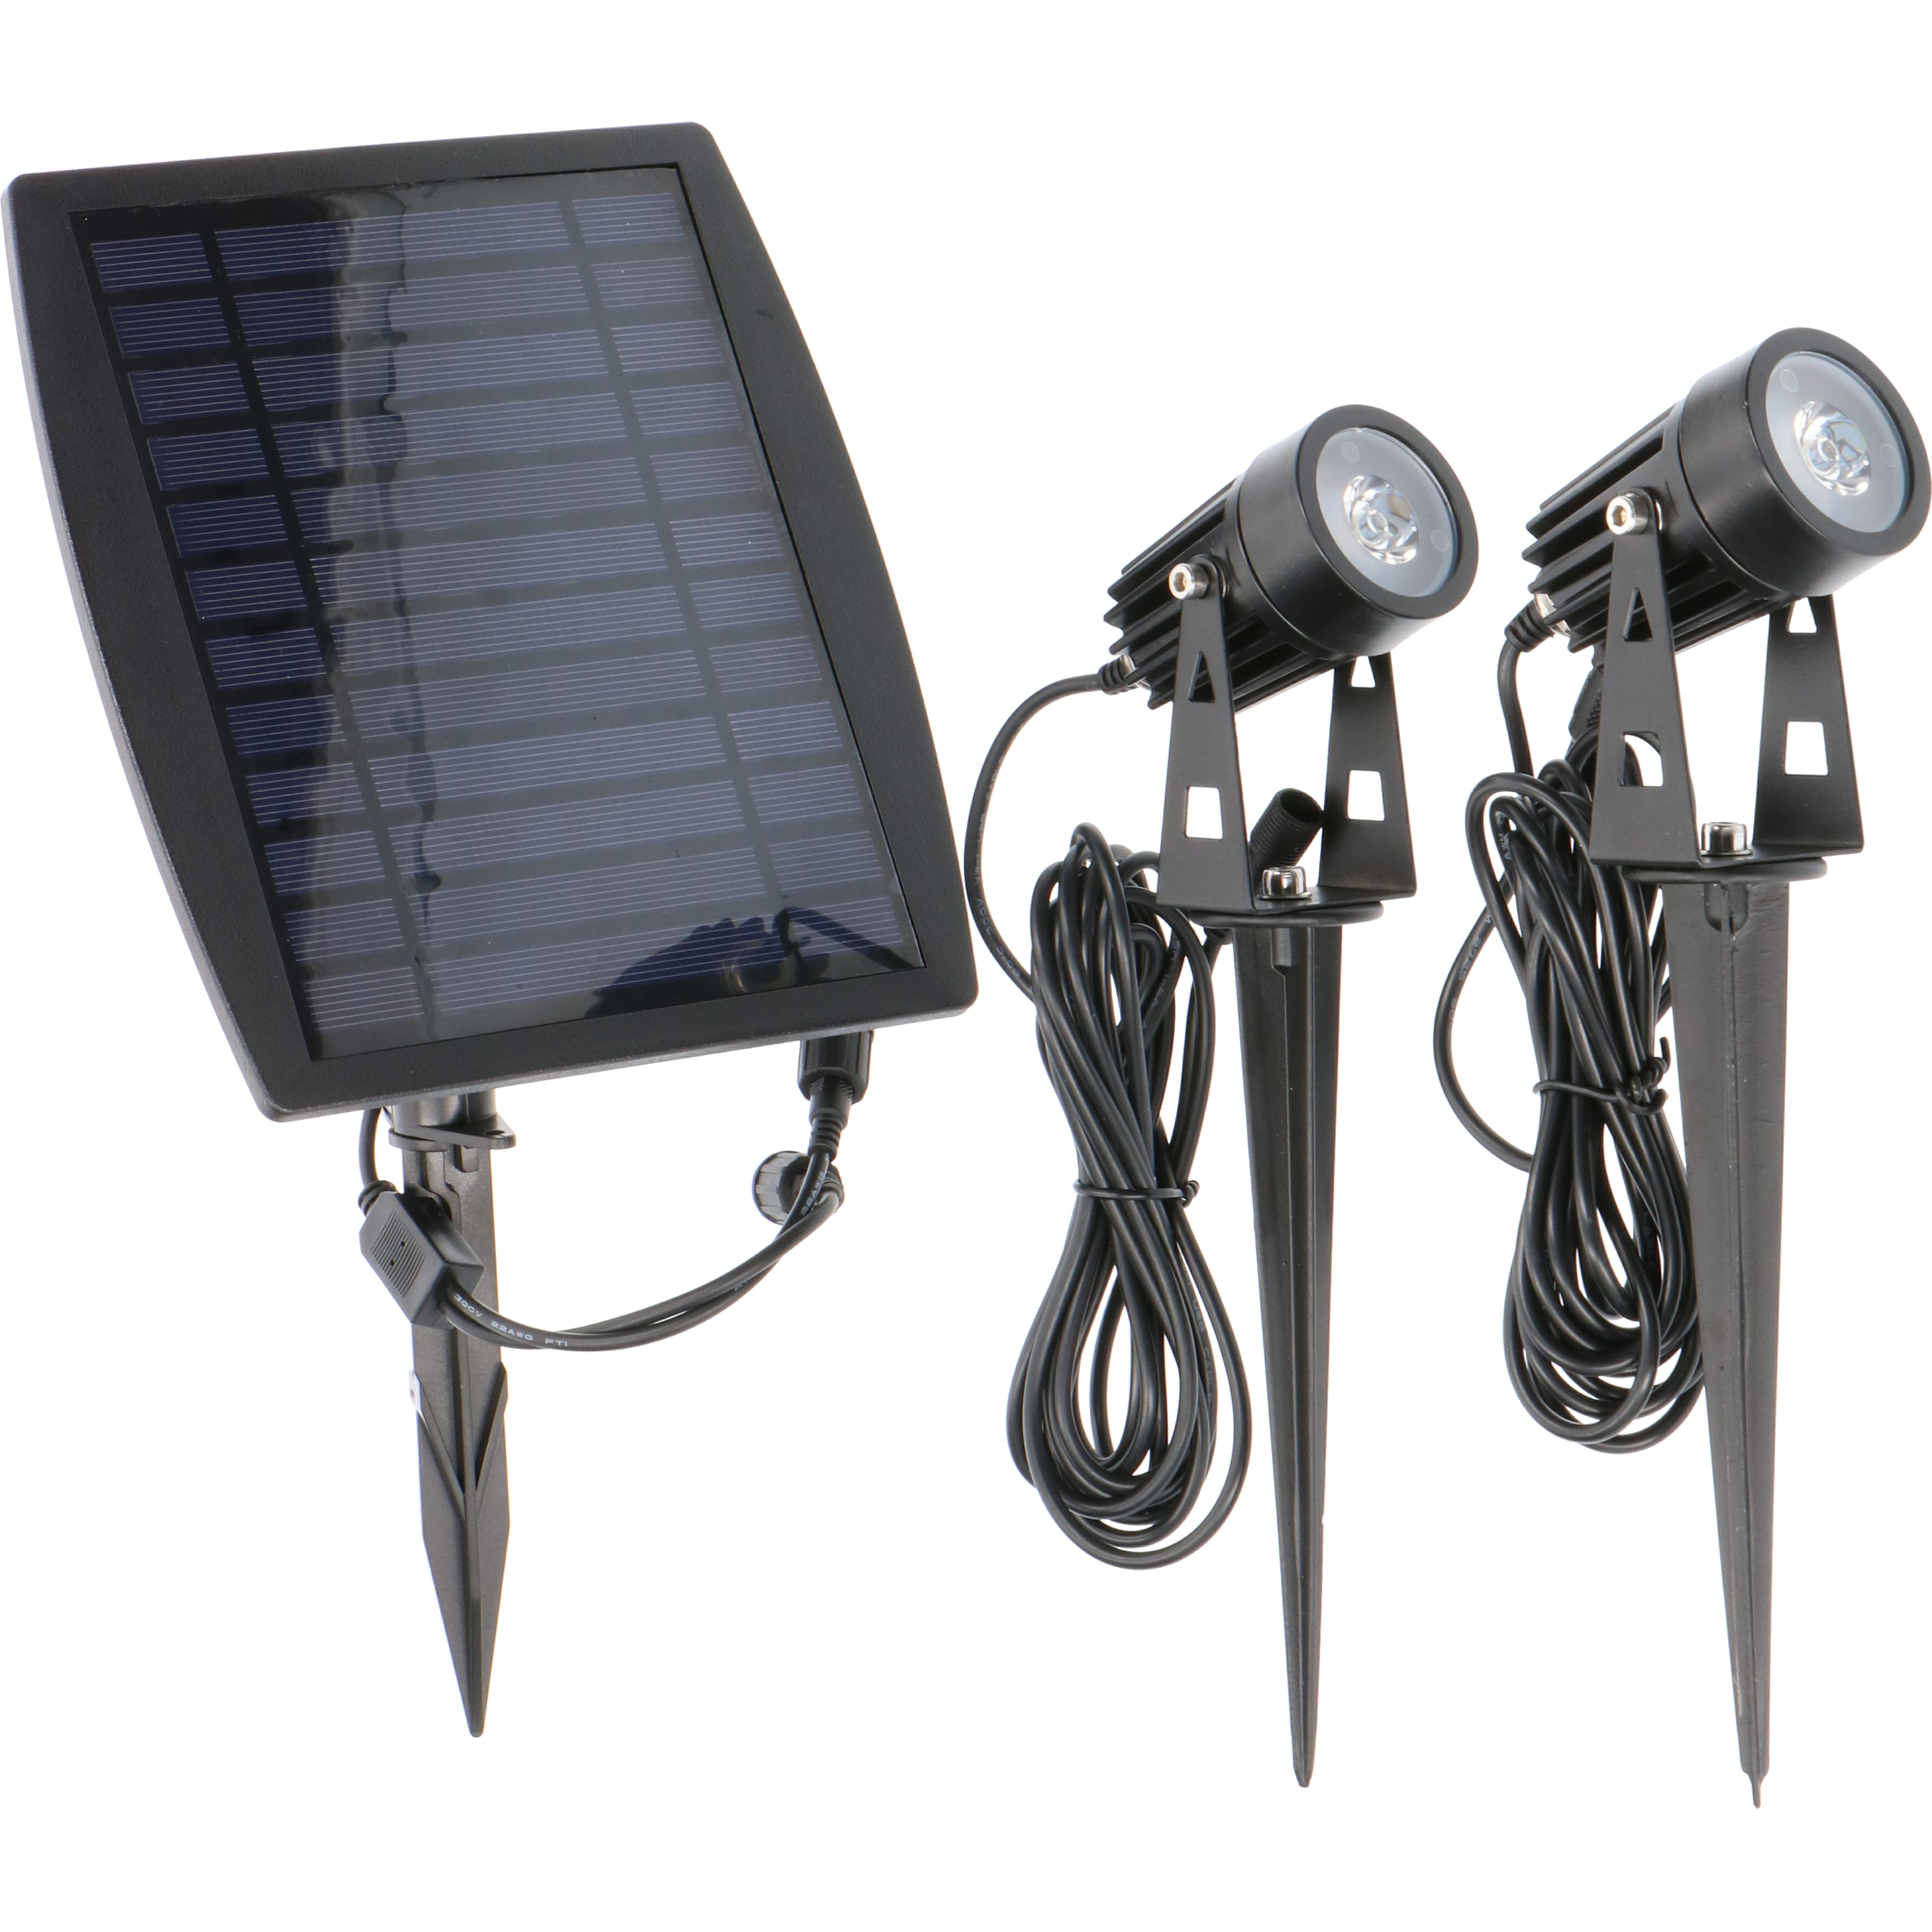 Elektromaterial günstig kaufen - Online Shop - SHADA Solar